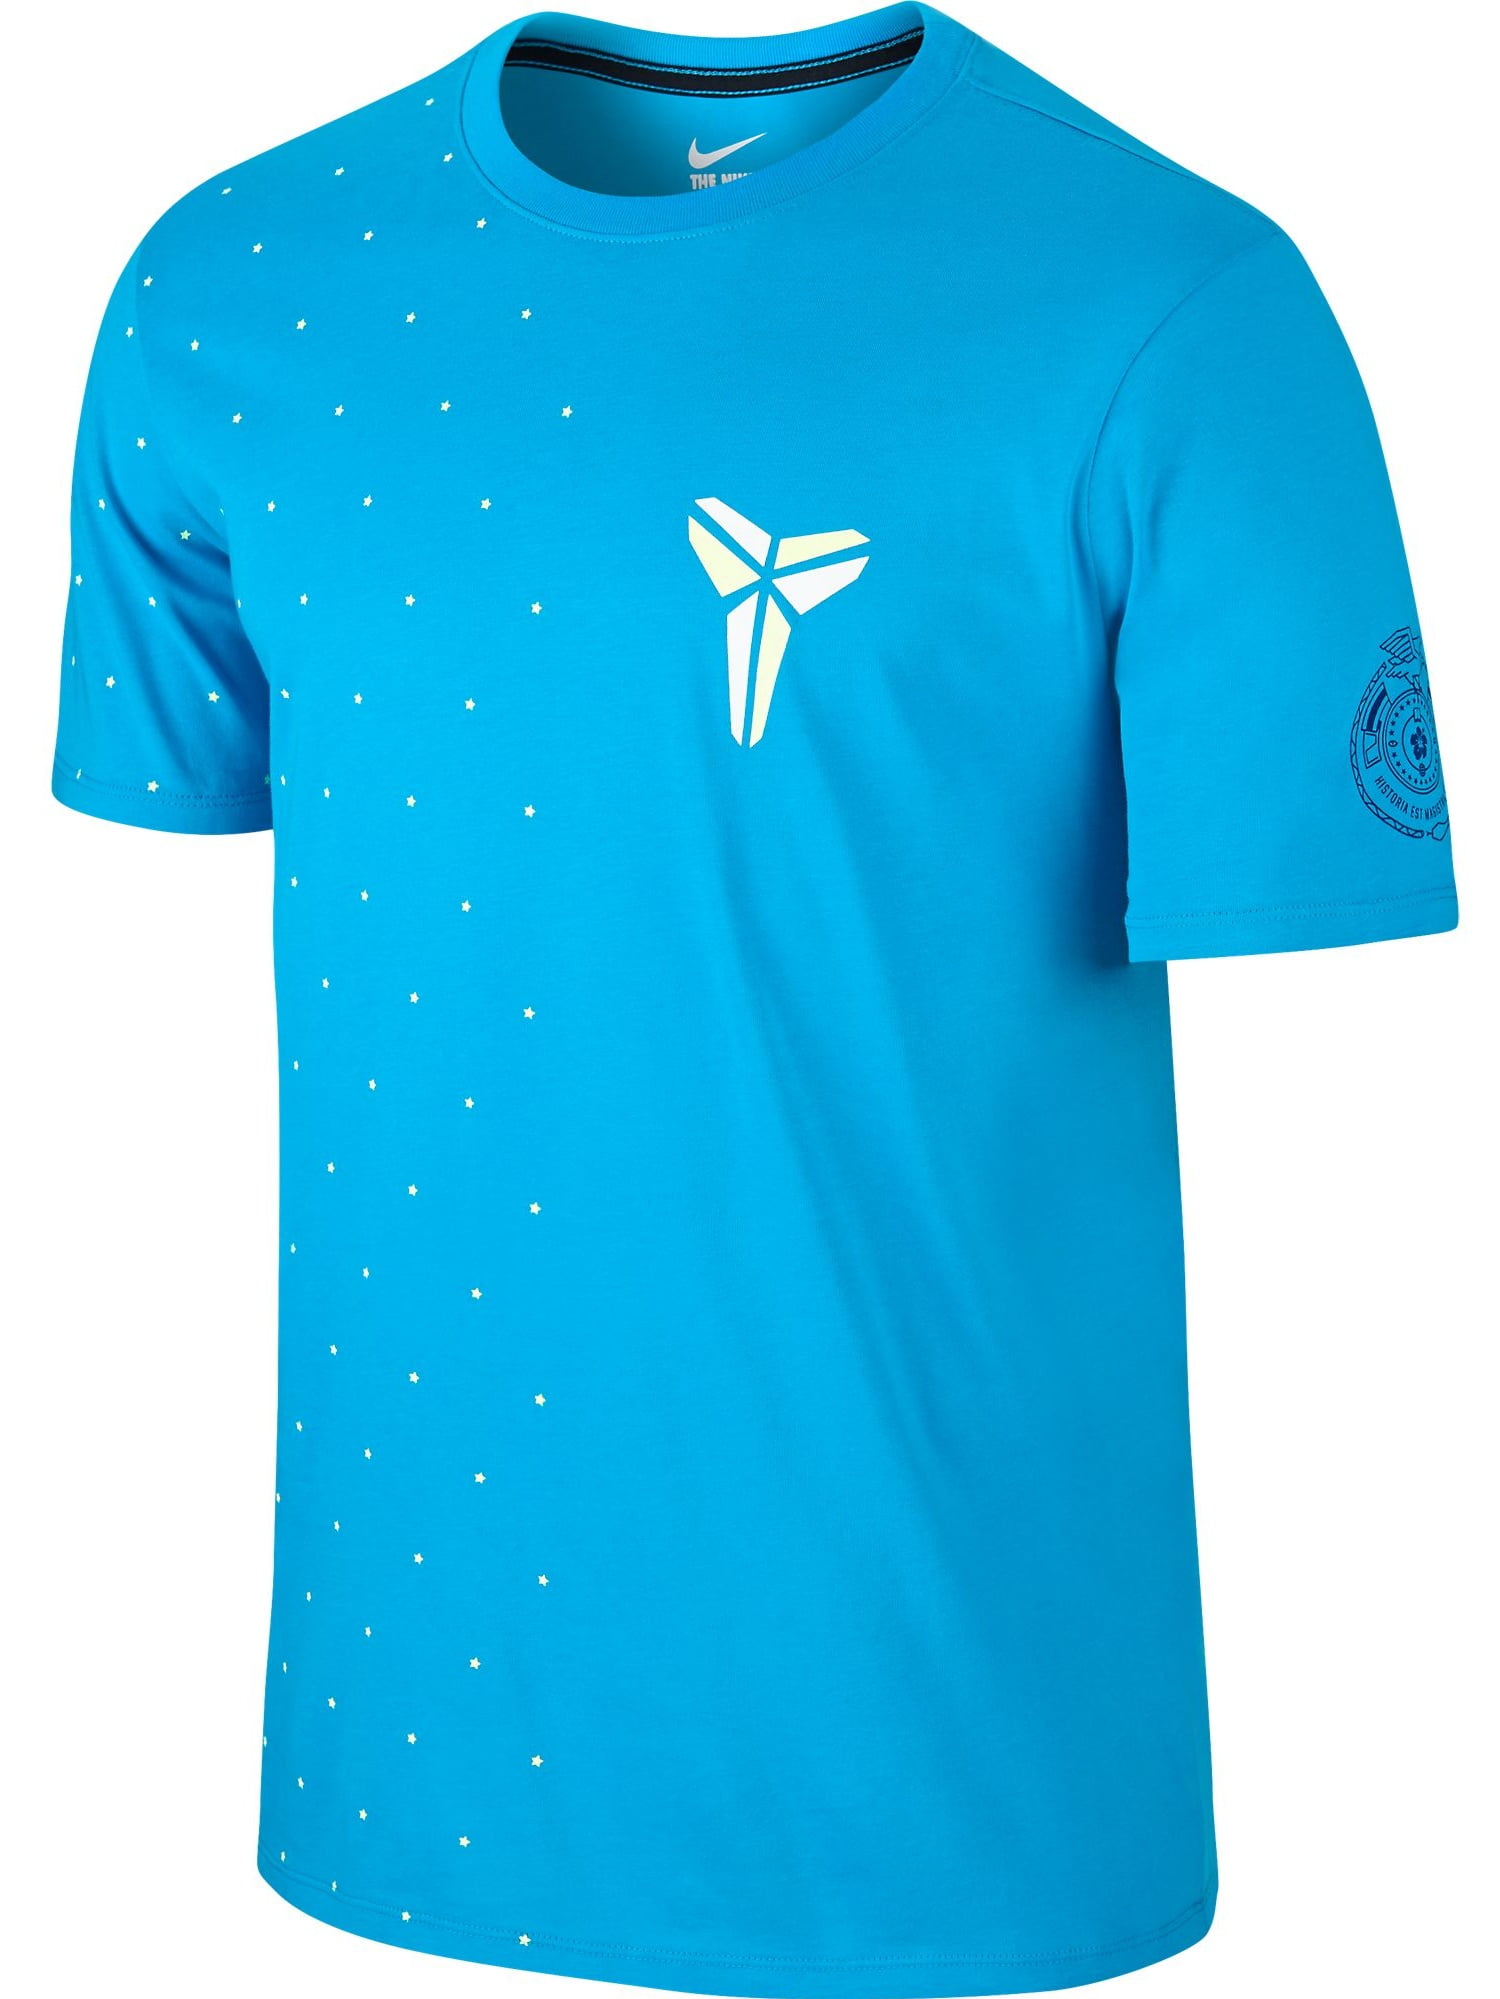 Nike Kobe X Dri Fit Men's T-Shirt Blue 